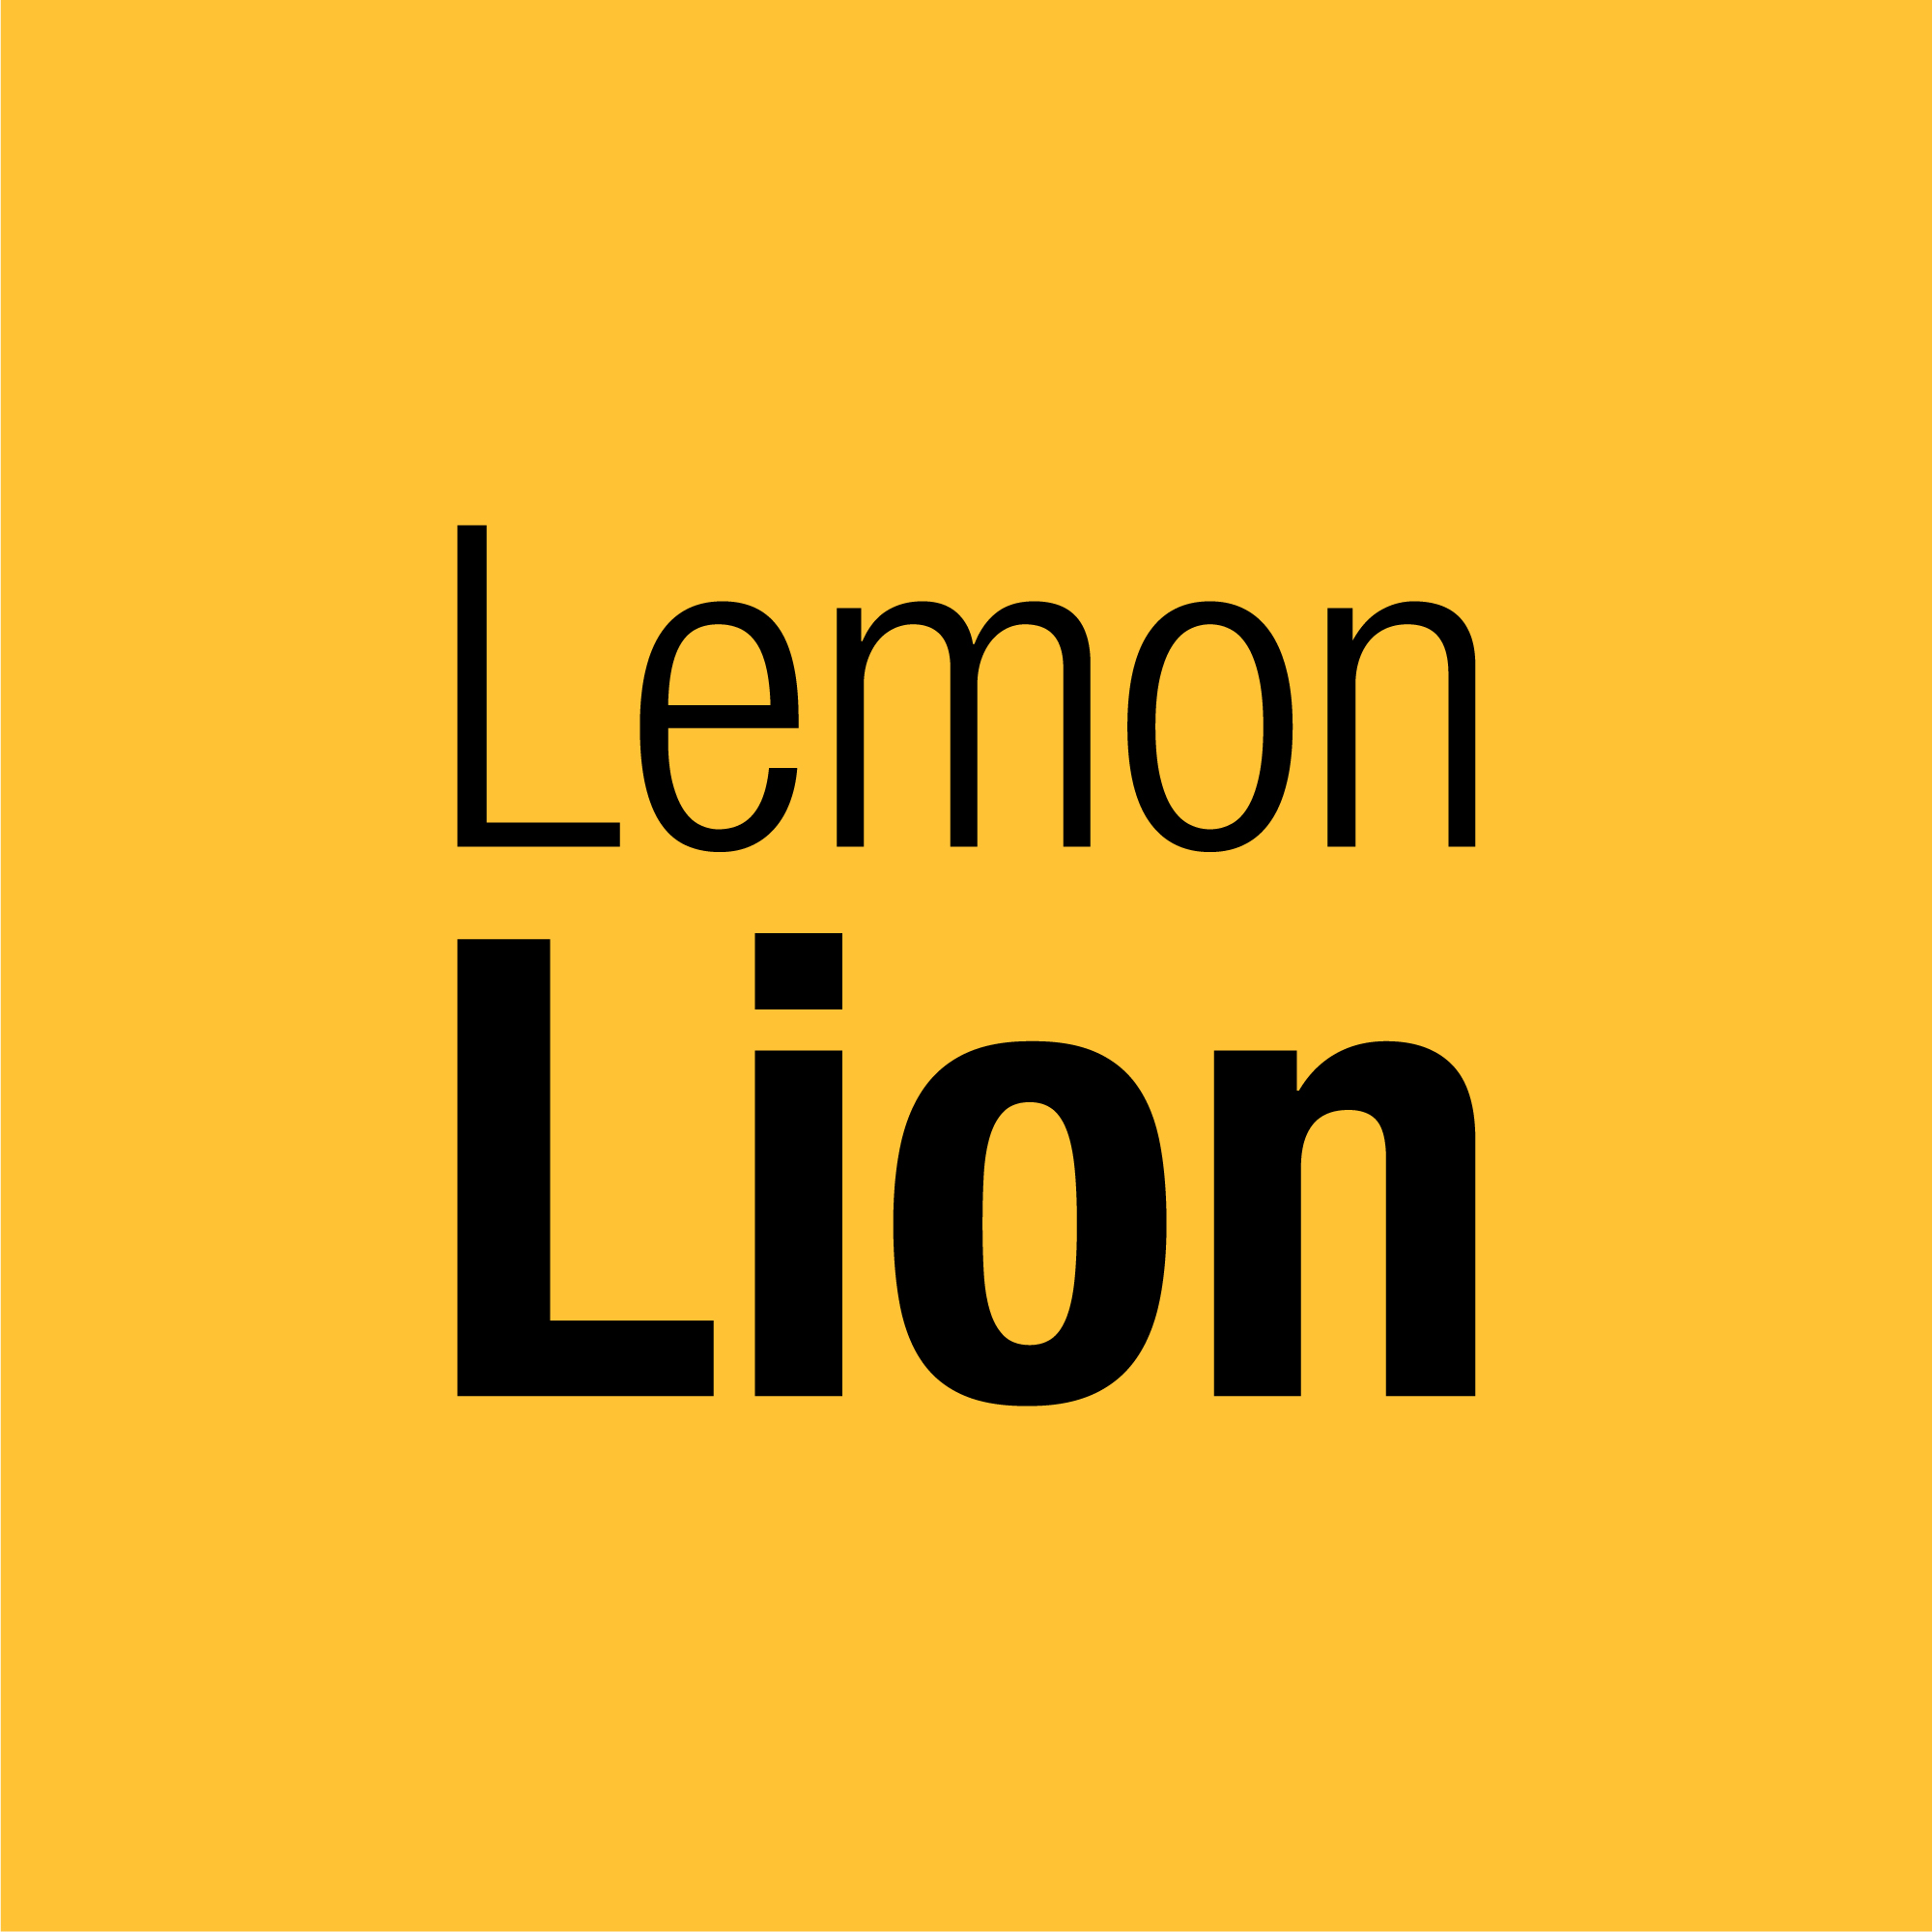 Lemon Lion